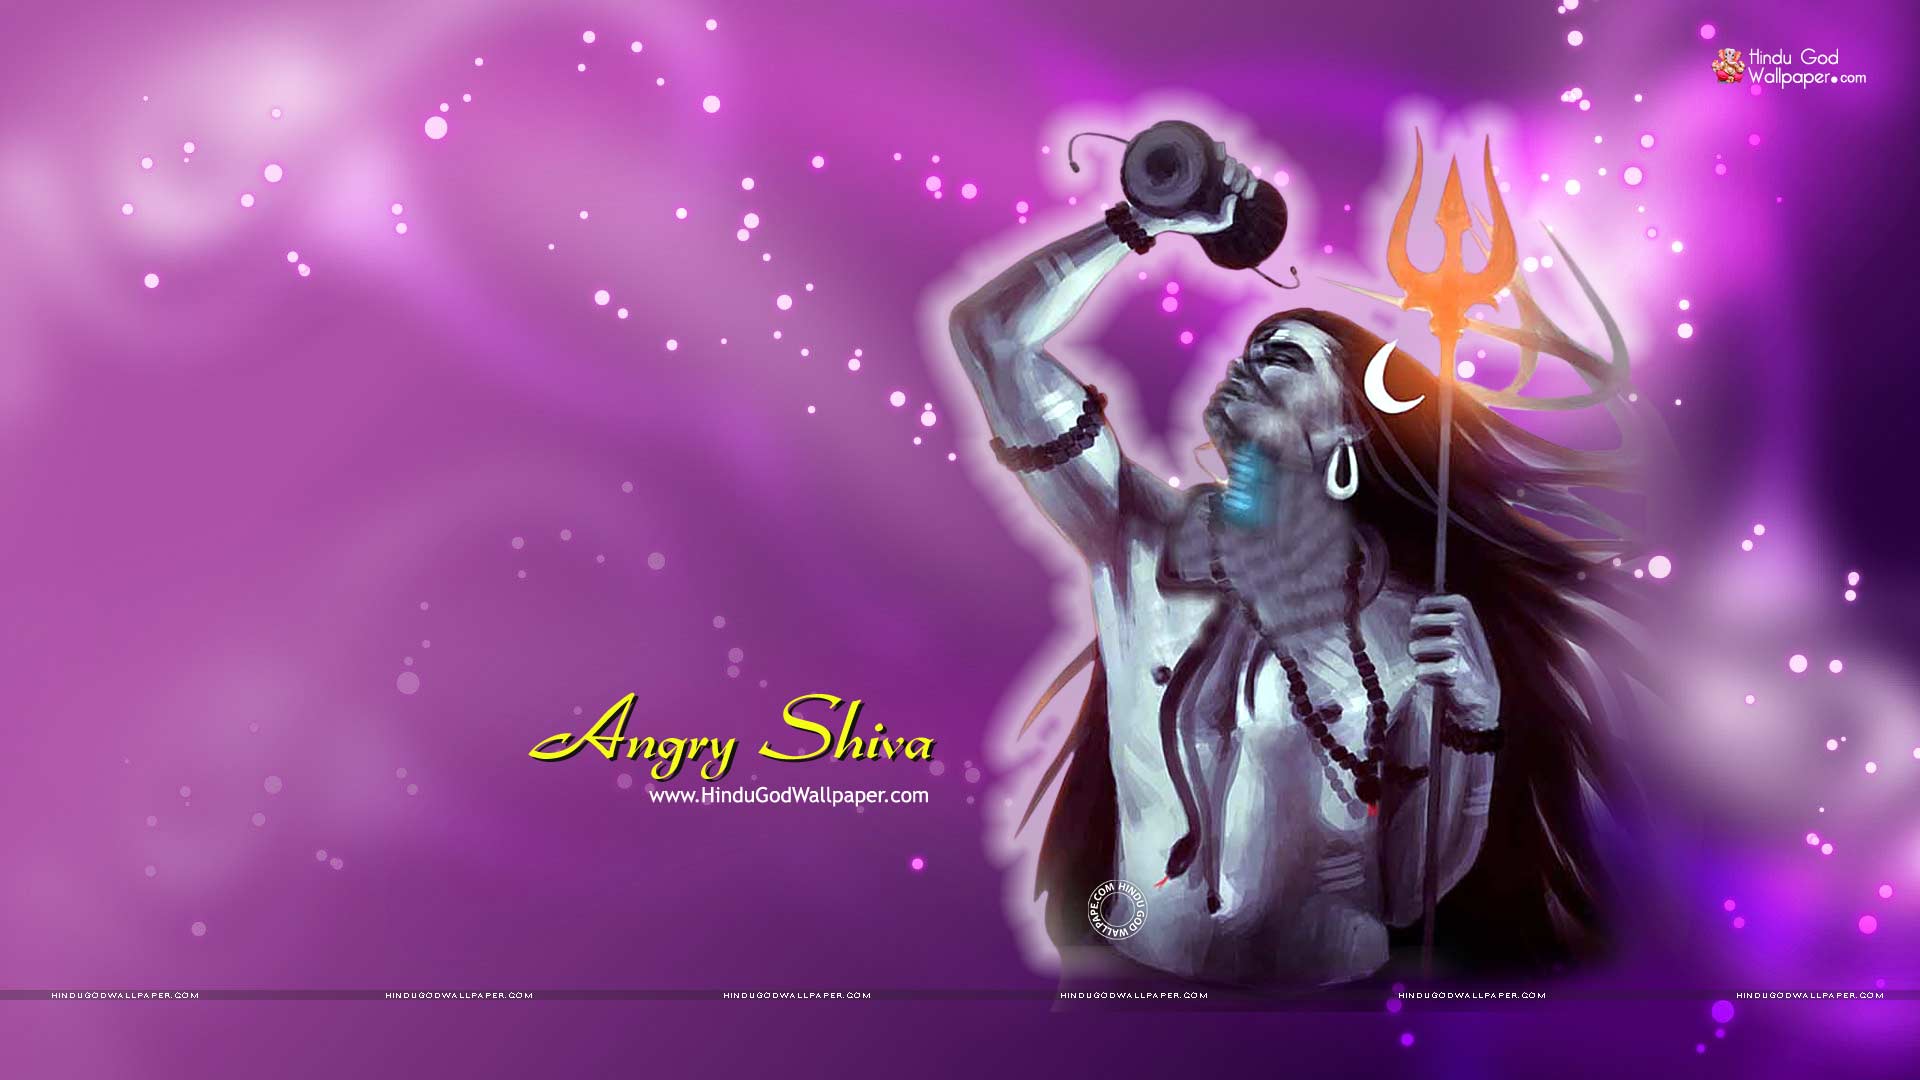 Angry Shiva HD Wallpaper 1080p Image Full Size Free Shiva